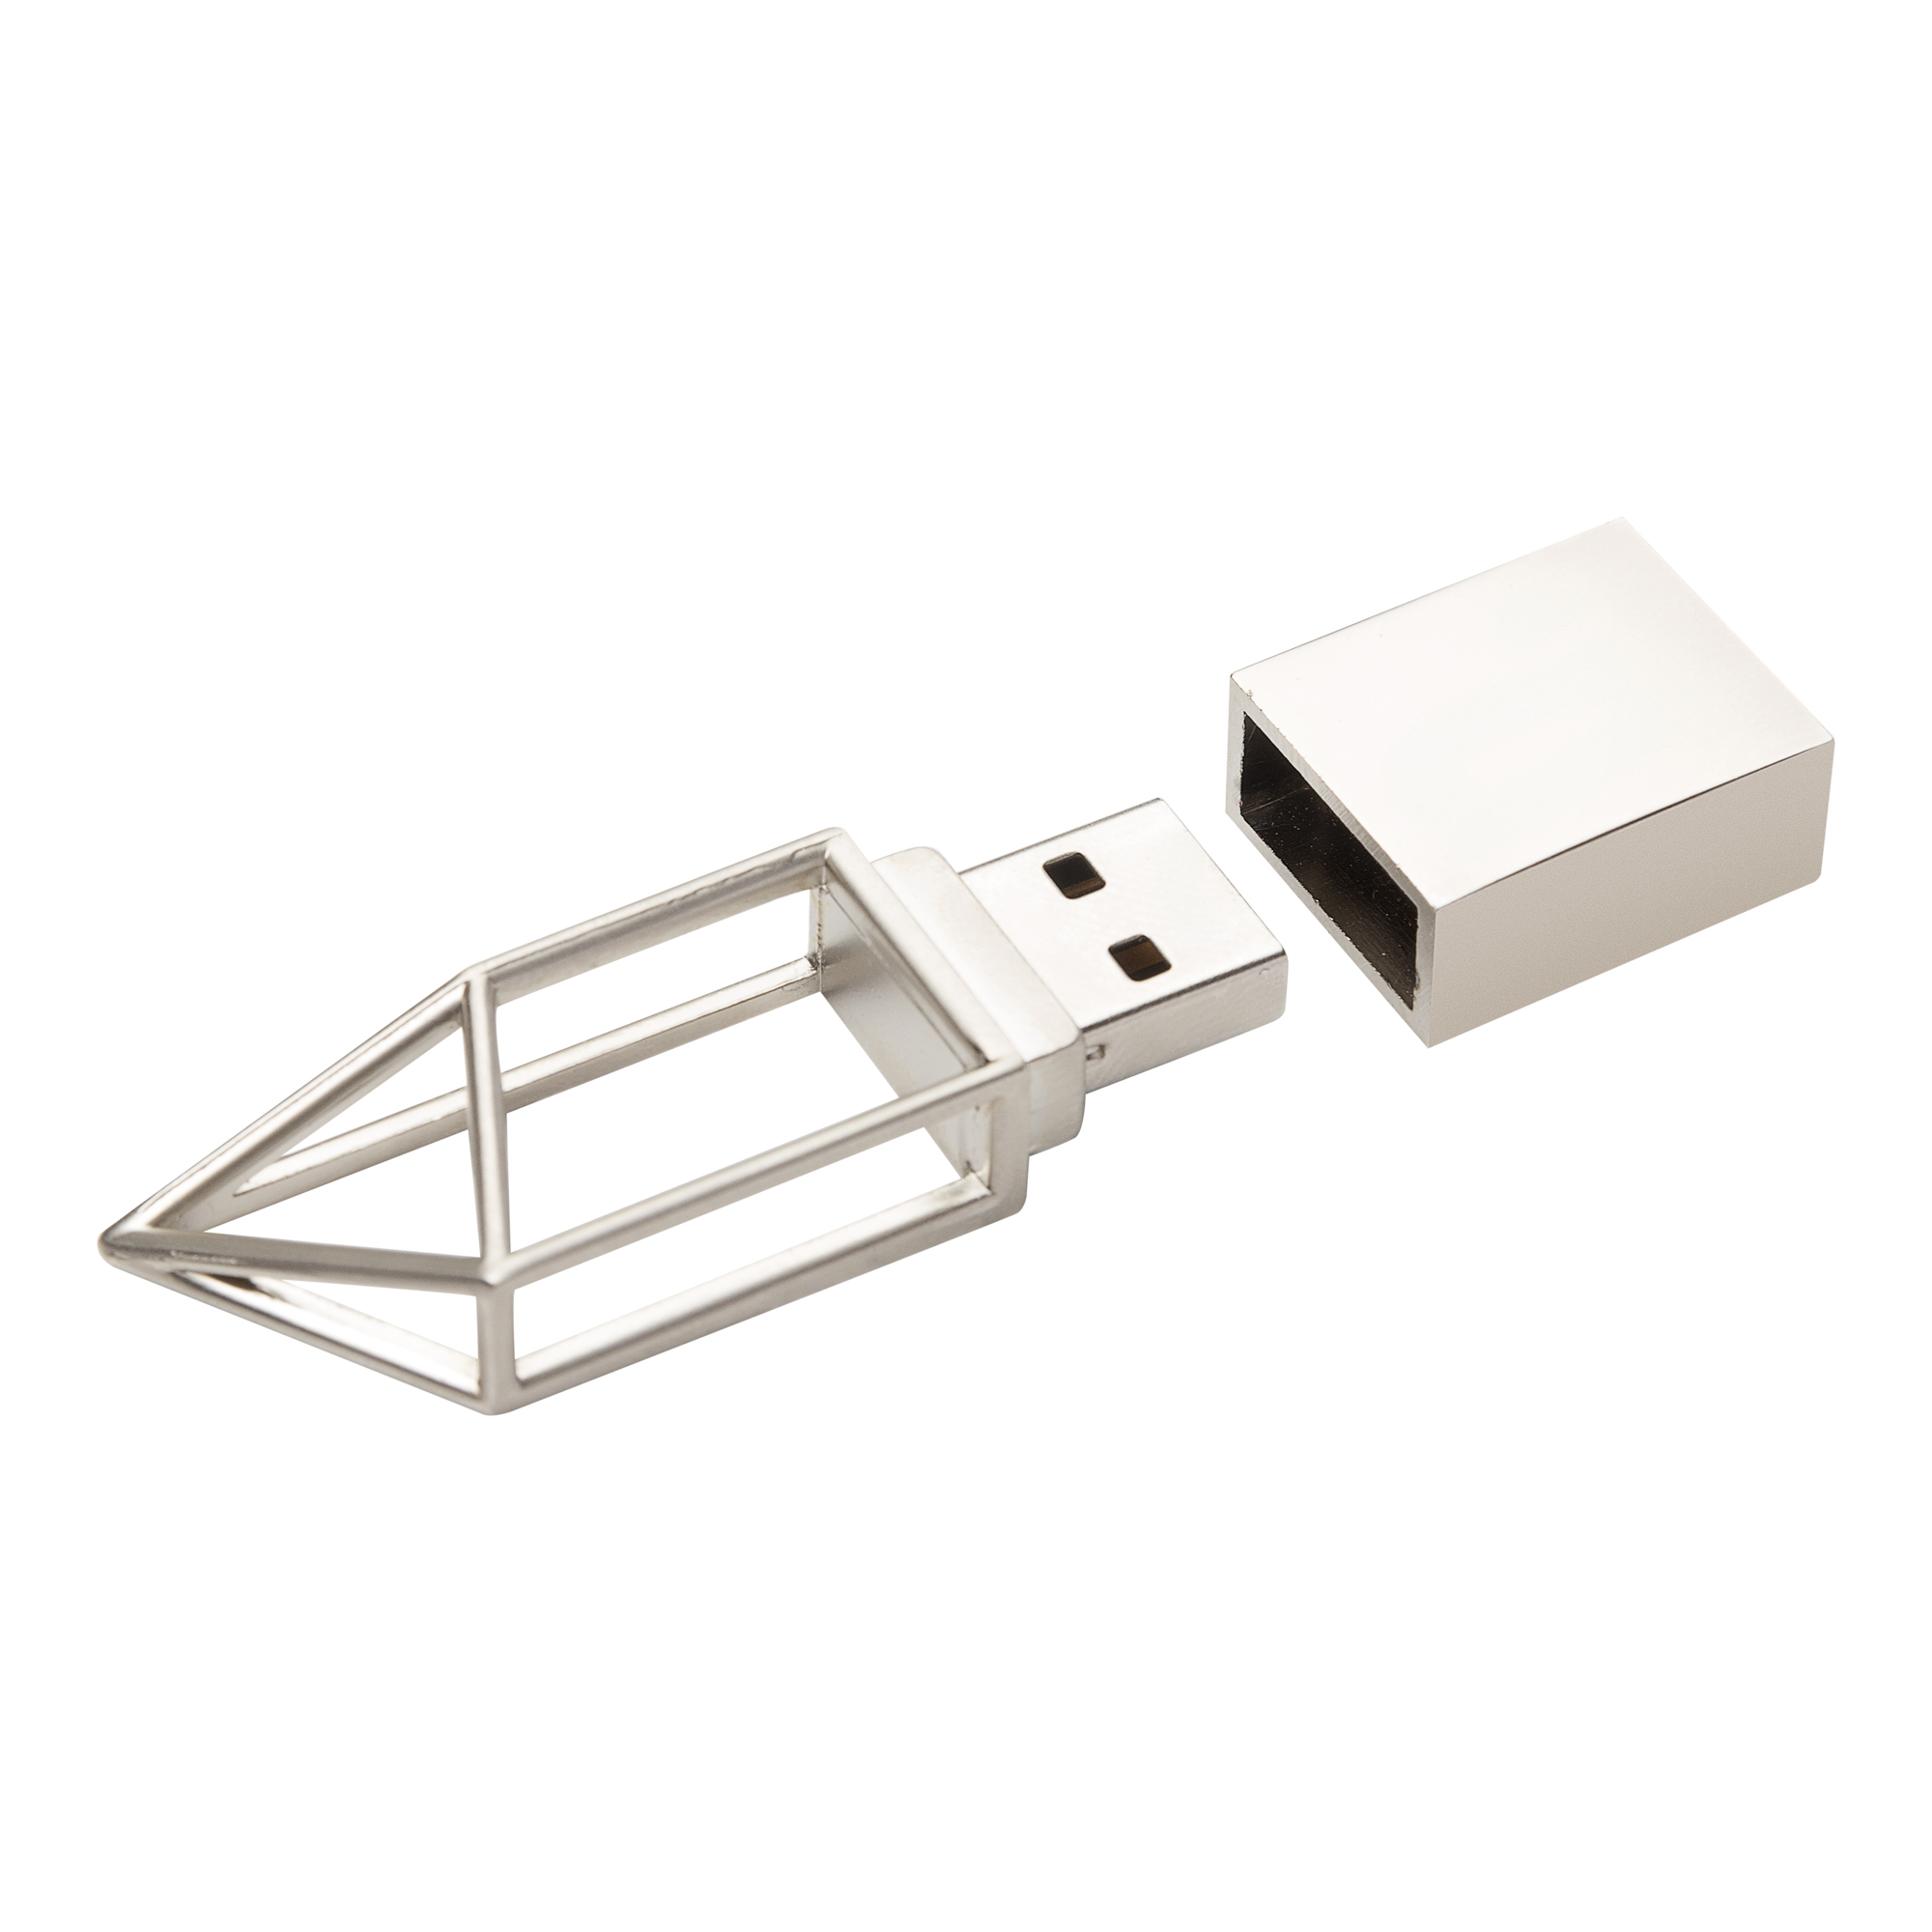 USB флешка модель 326 Matt, цвет S, объем памяти 2 GB